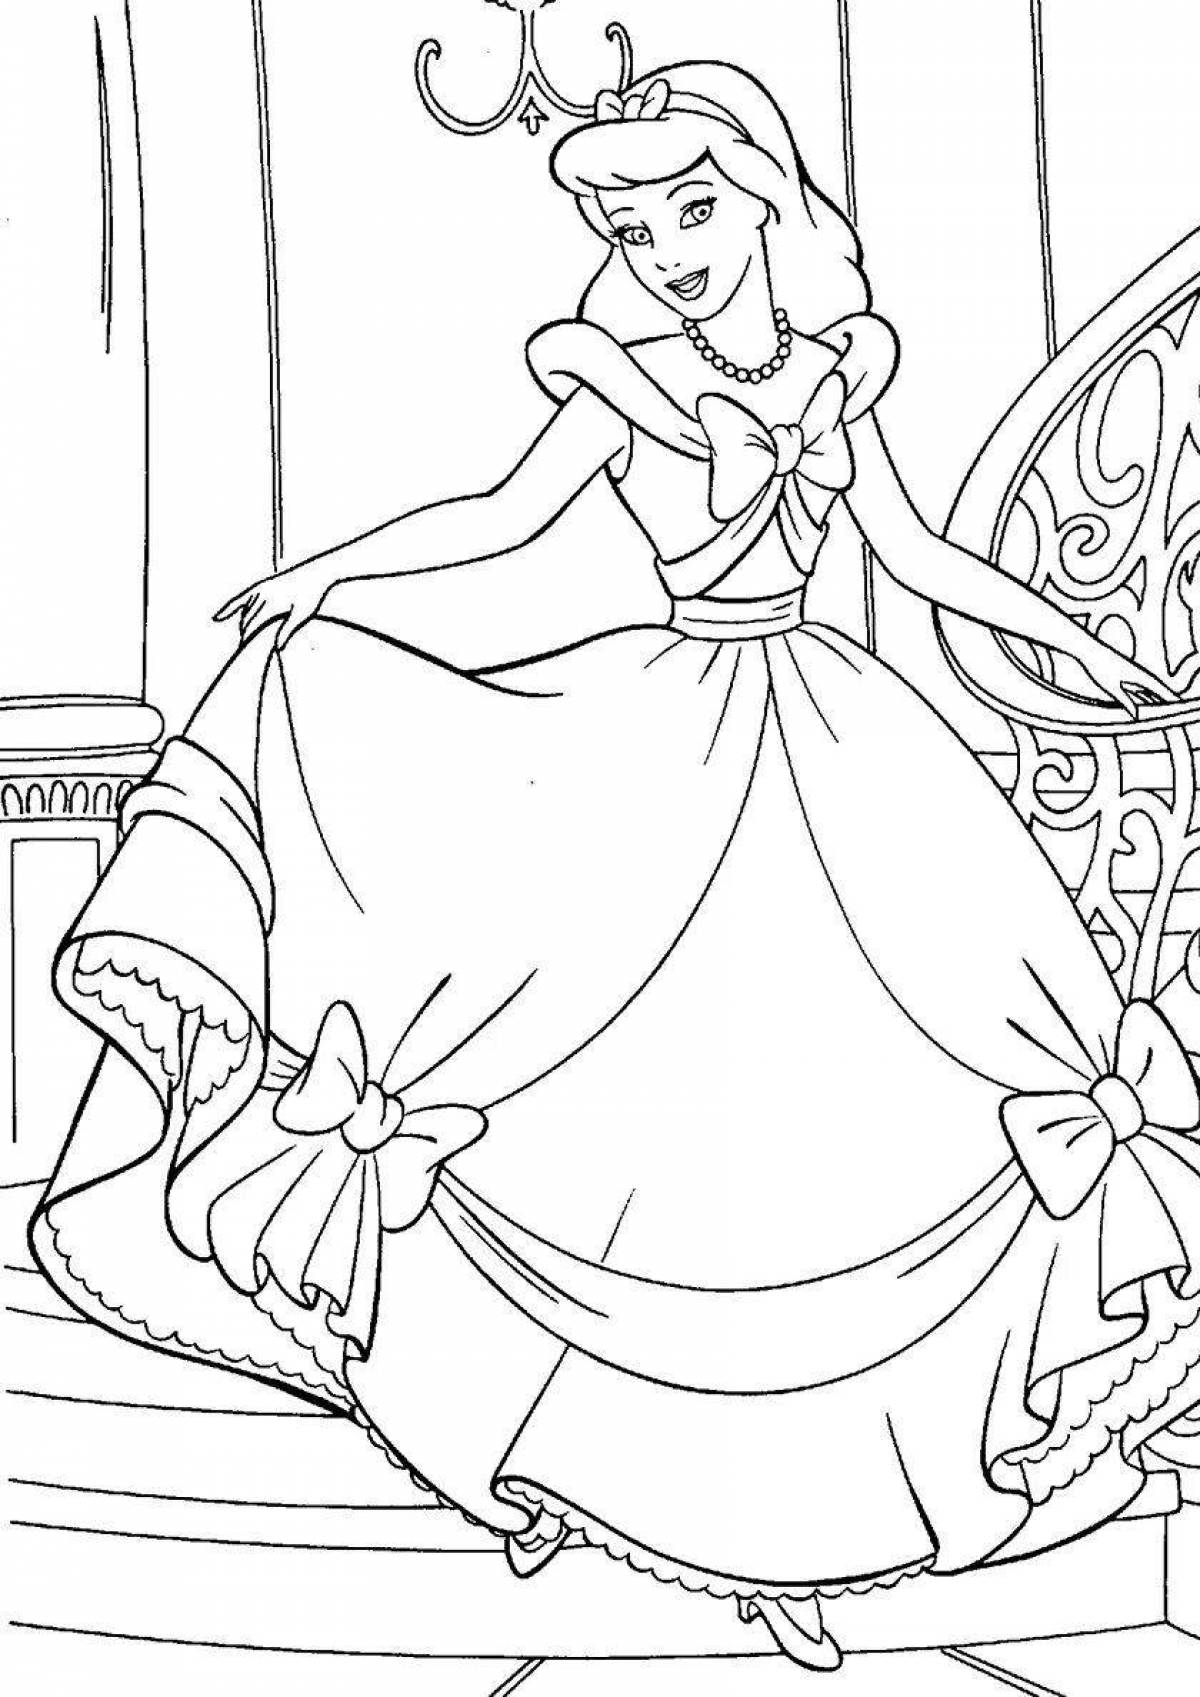 Awesome princess cinderella coloring page